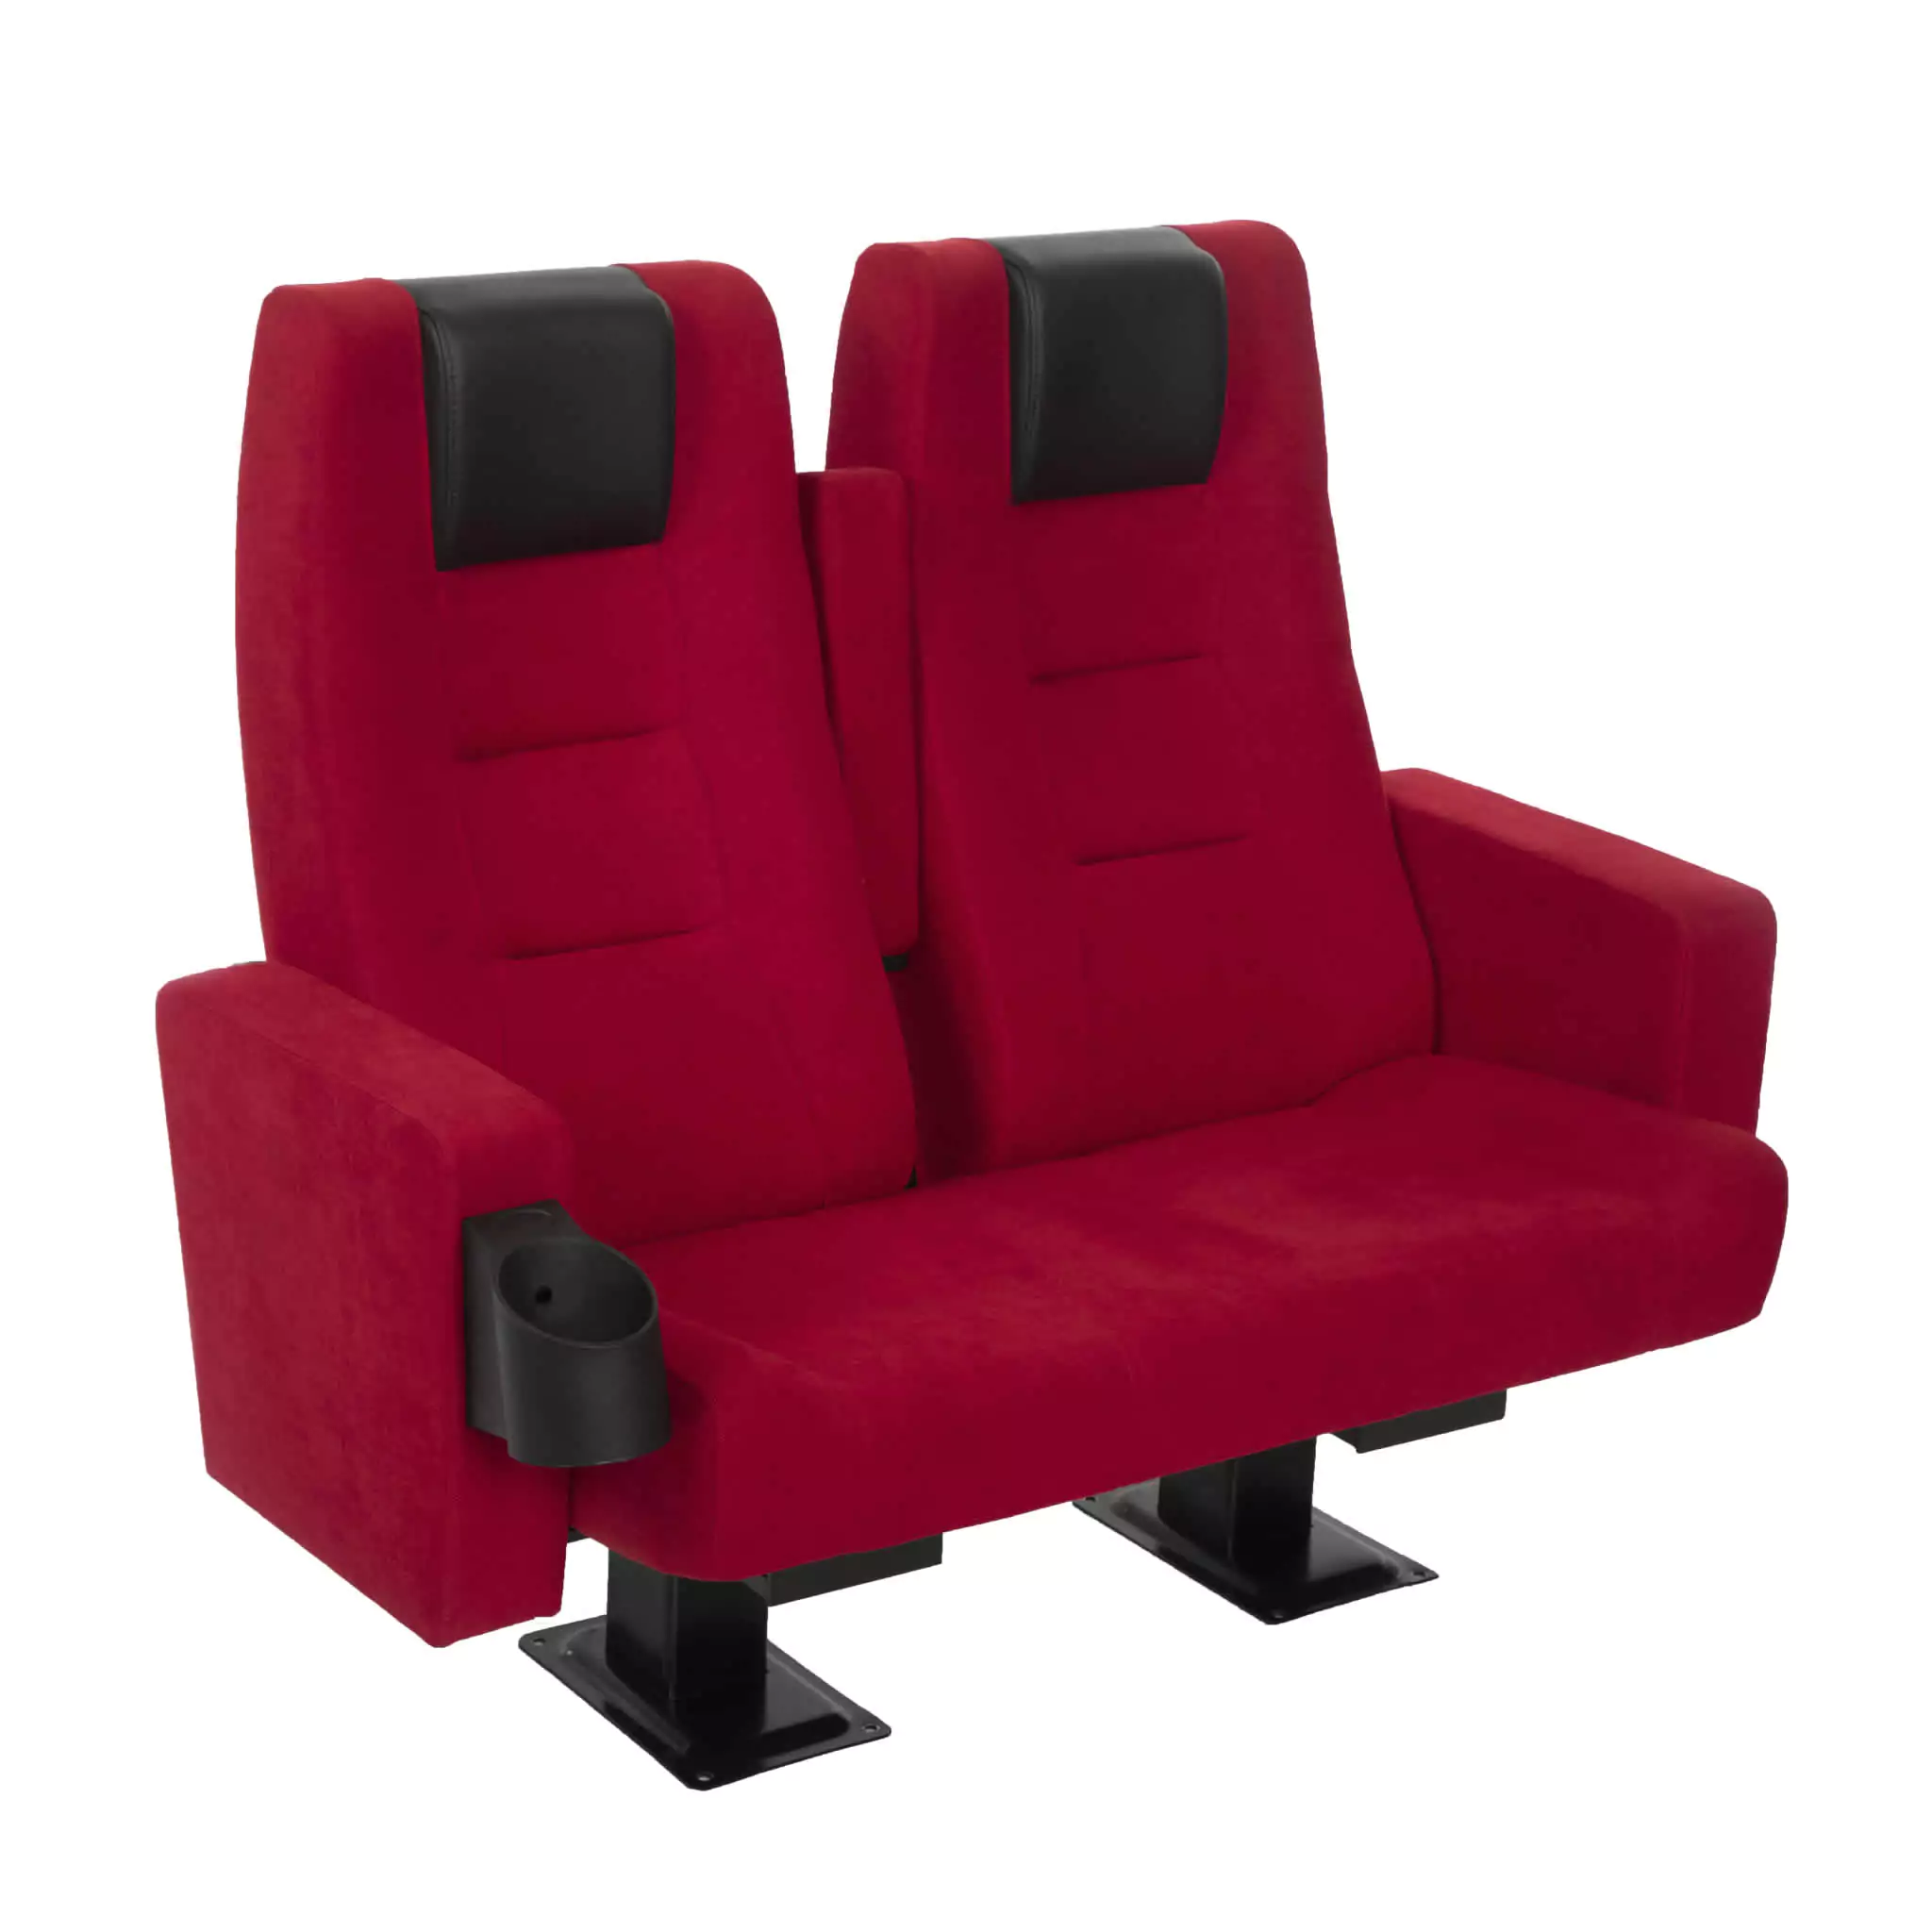 Simko Seating Product Cinema Seat Boss PR Twin